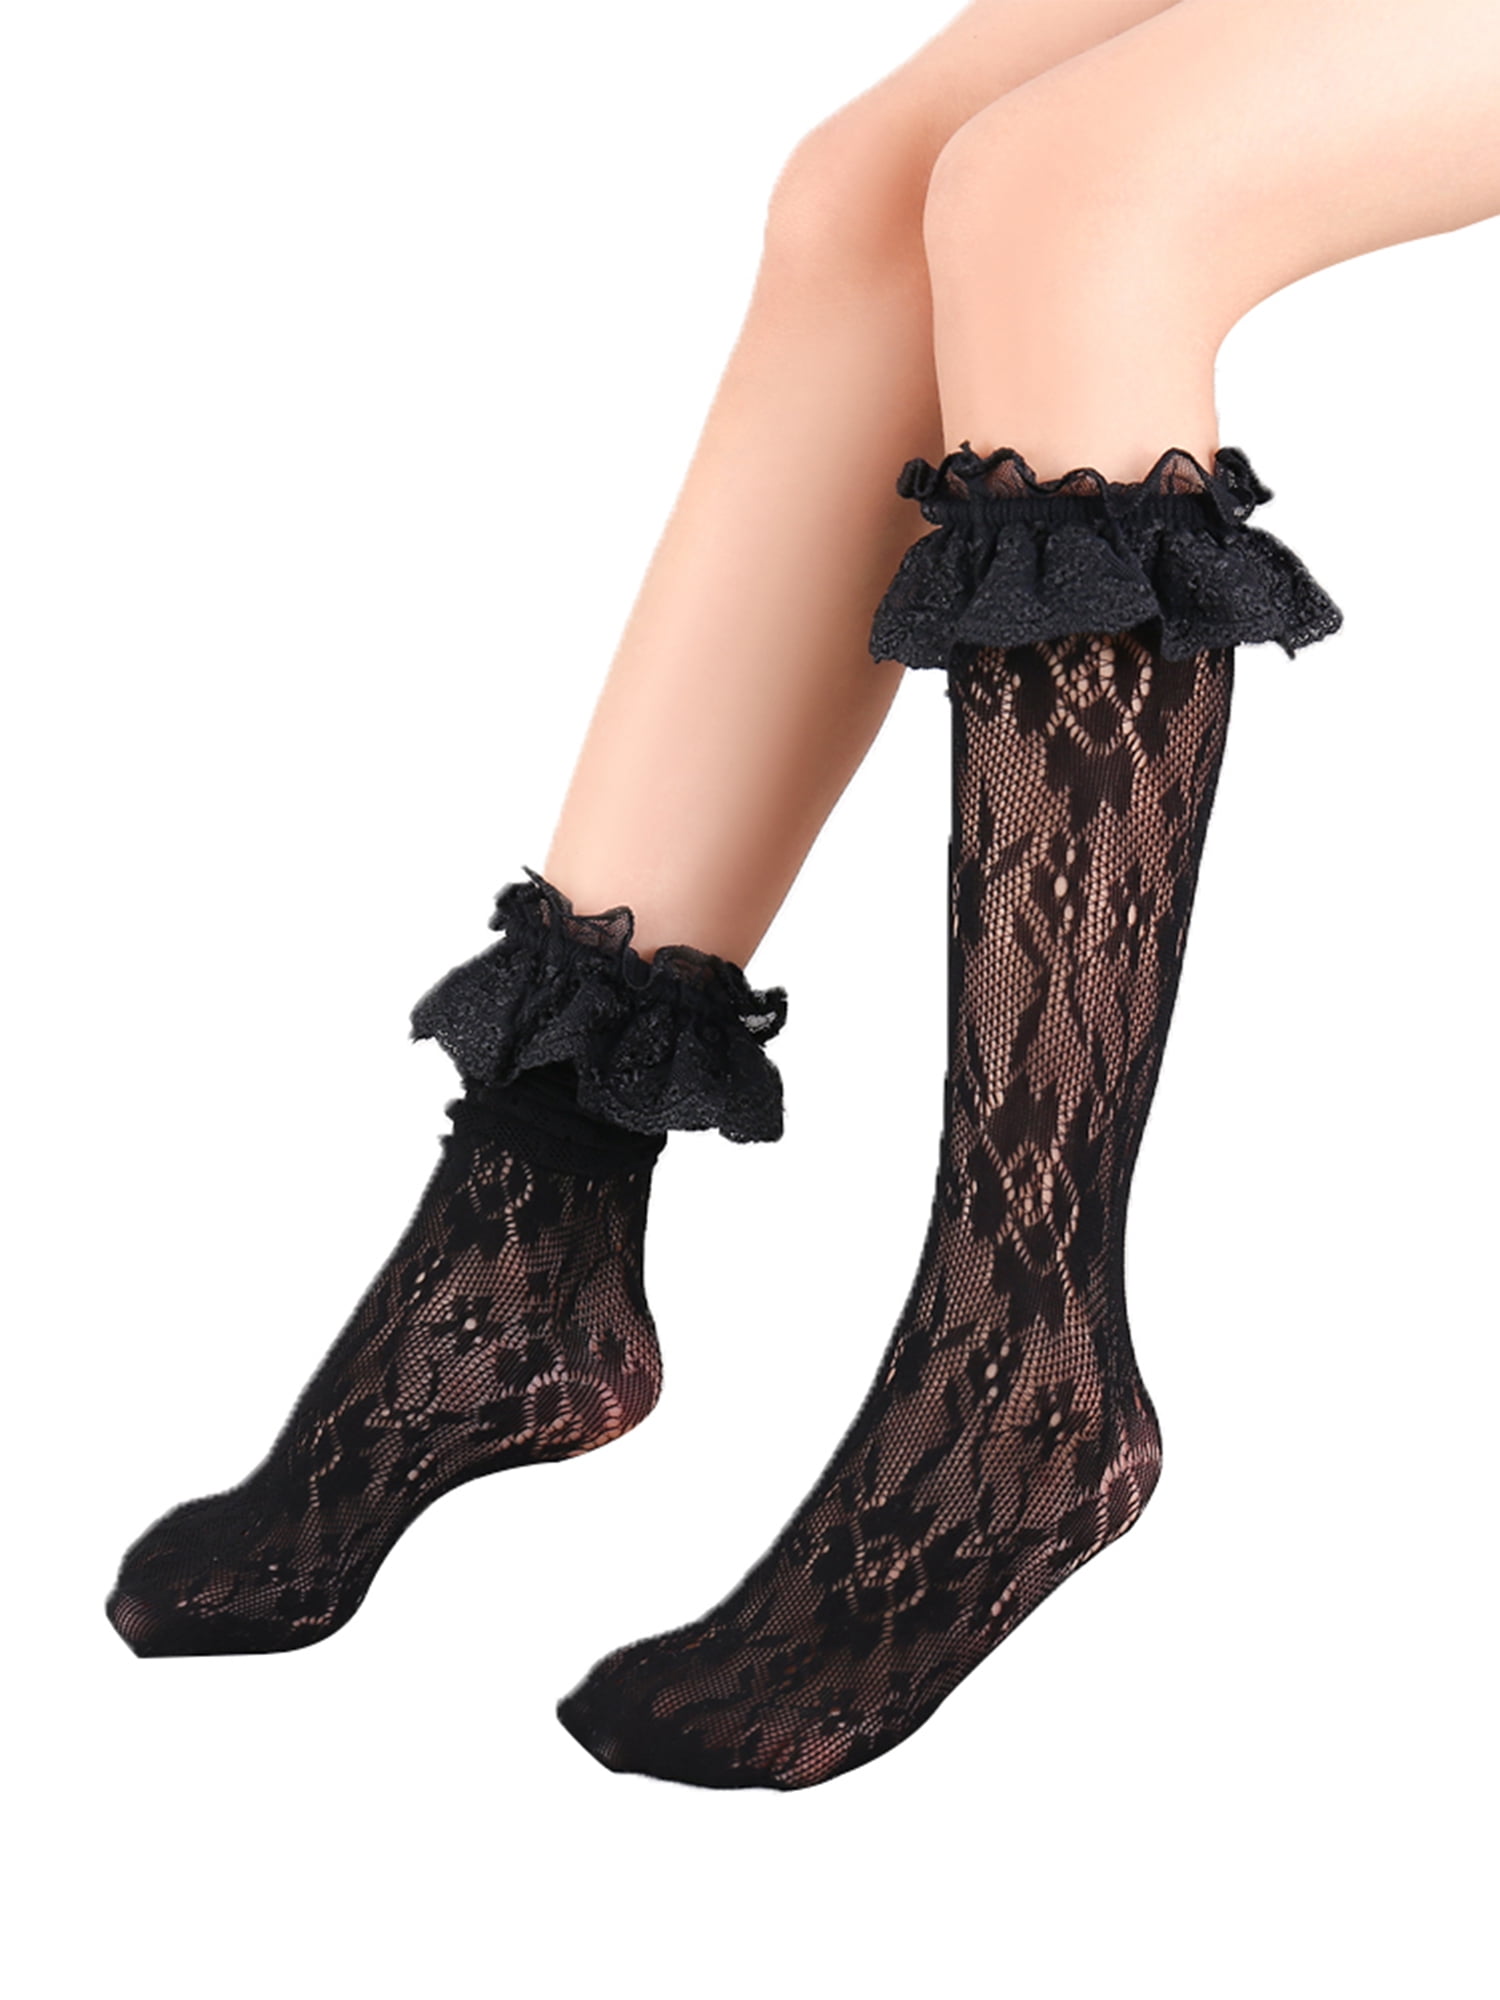 Gathered lace sock, Simons, Shop Women's Socks Online